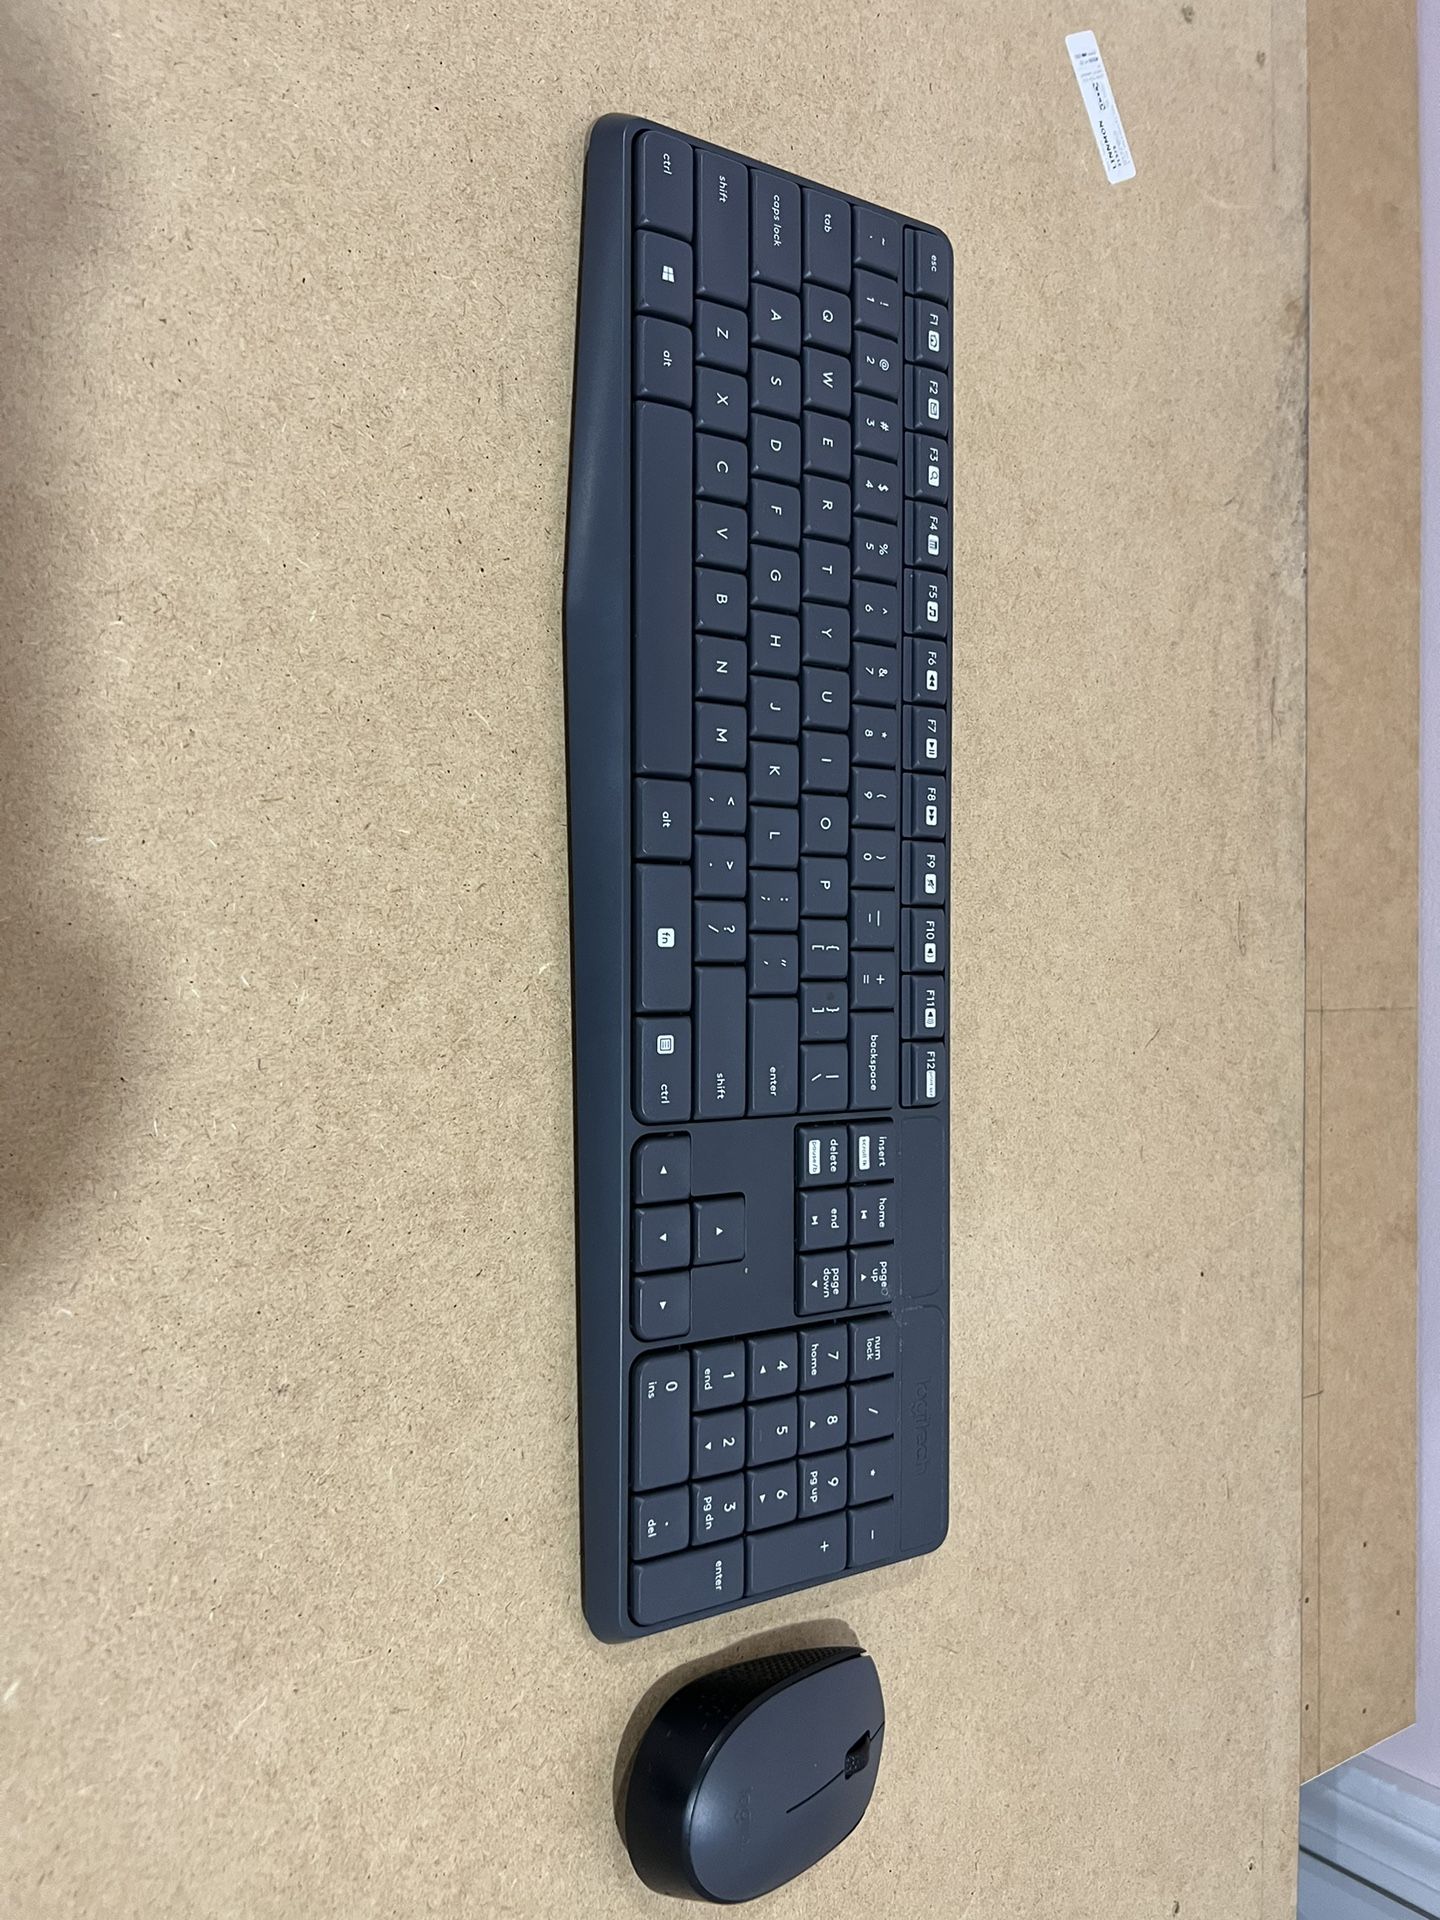 Keyboard mouse Combo Wireless 